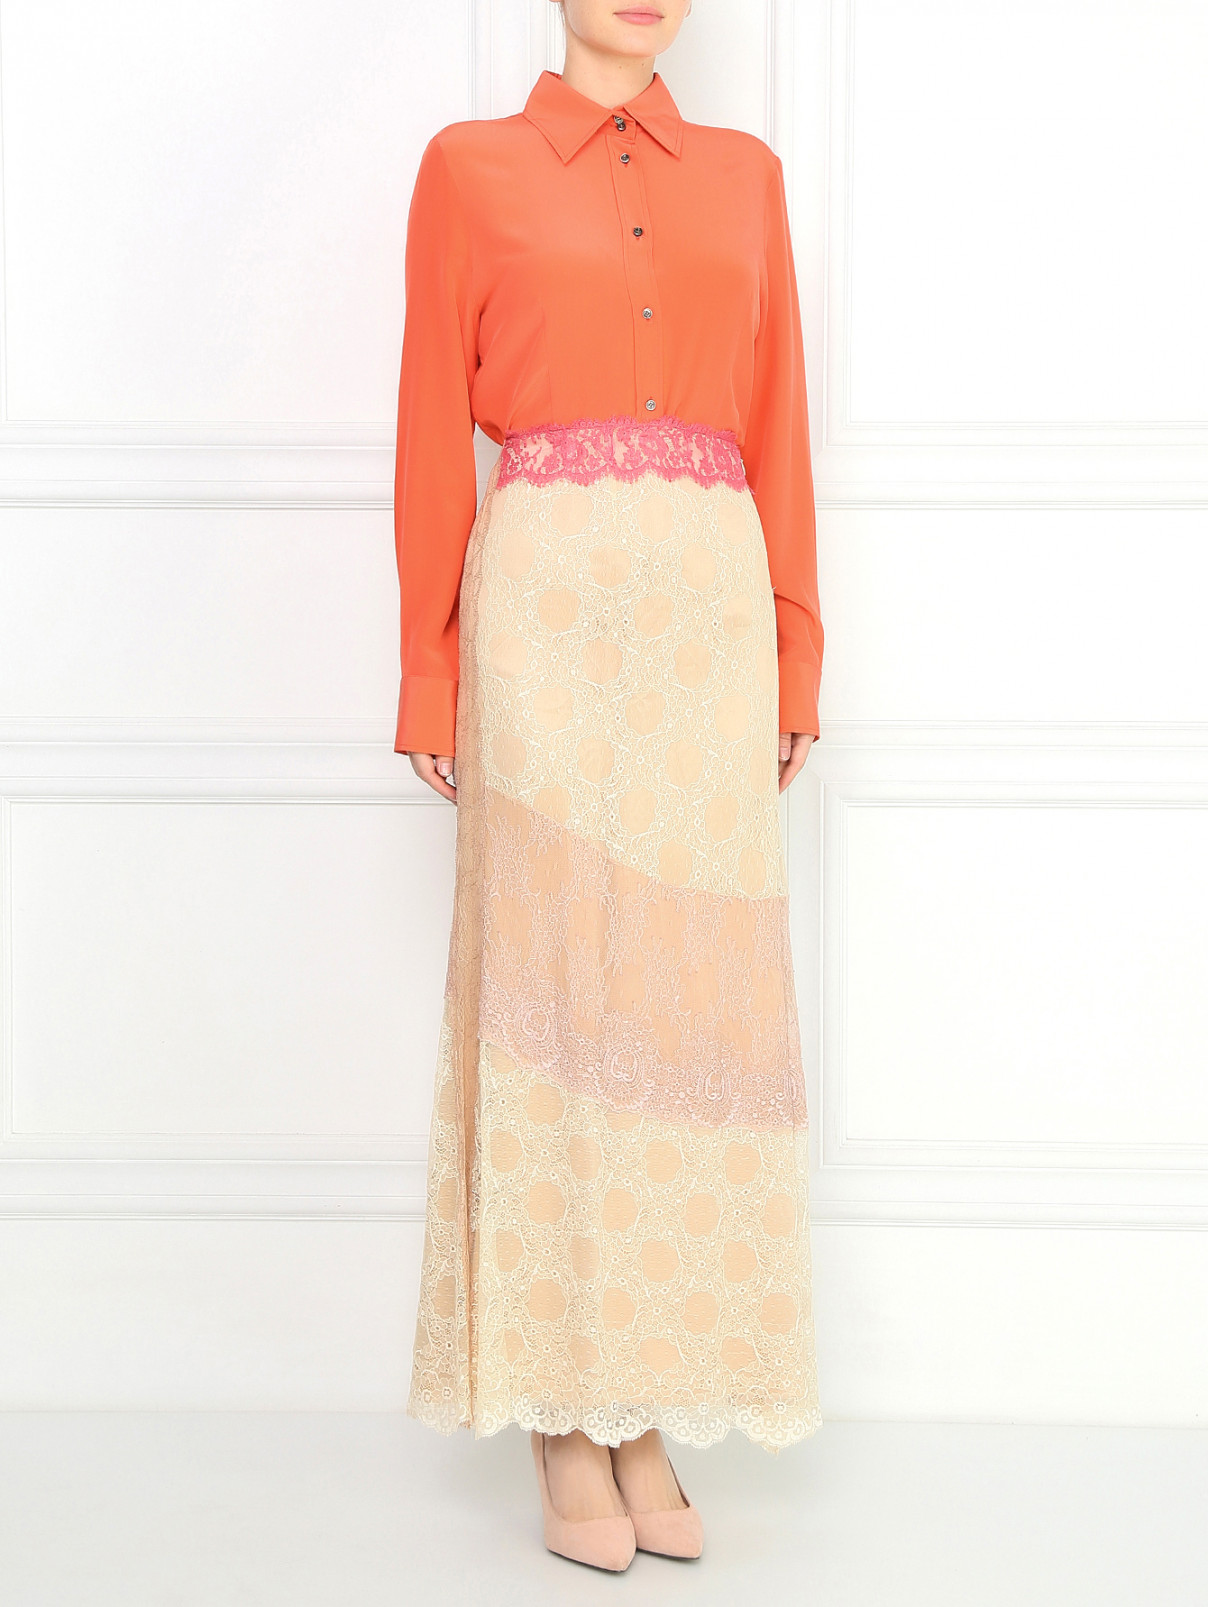 Кружевная юбка-макси Alberta Ferretti  –  Модель Общий вид  – Цвет:  Бежевый